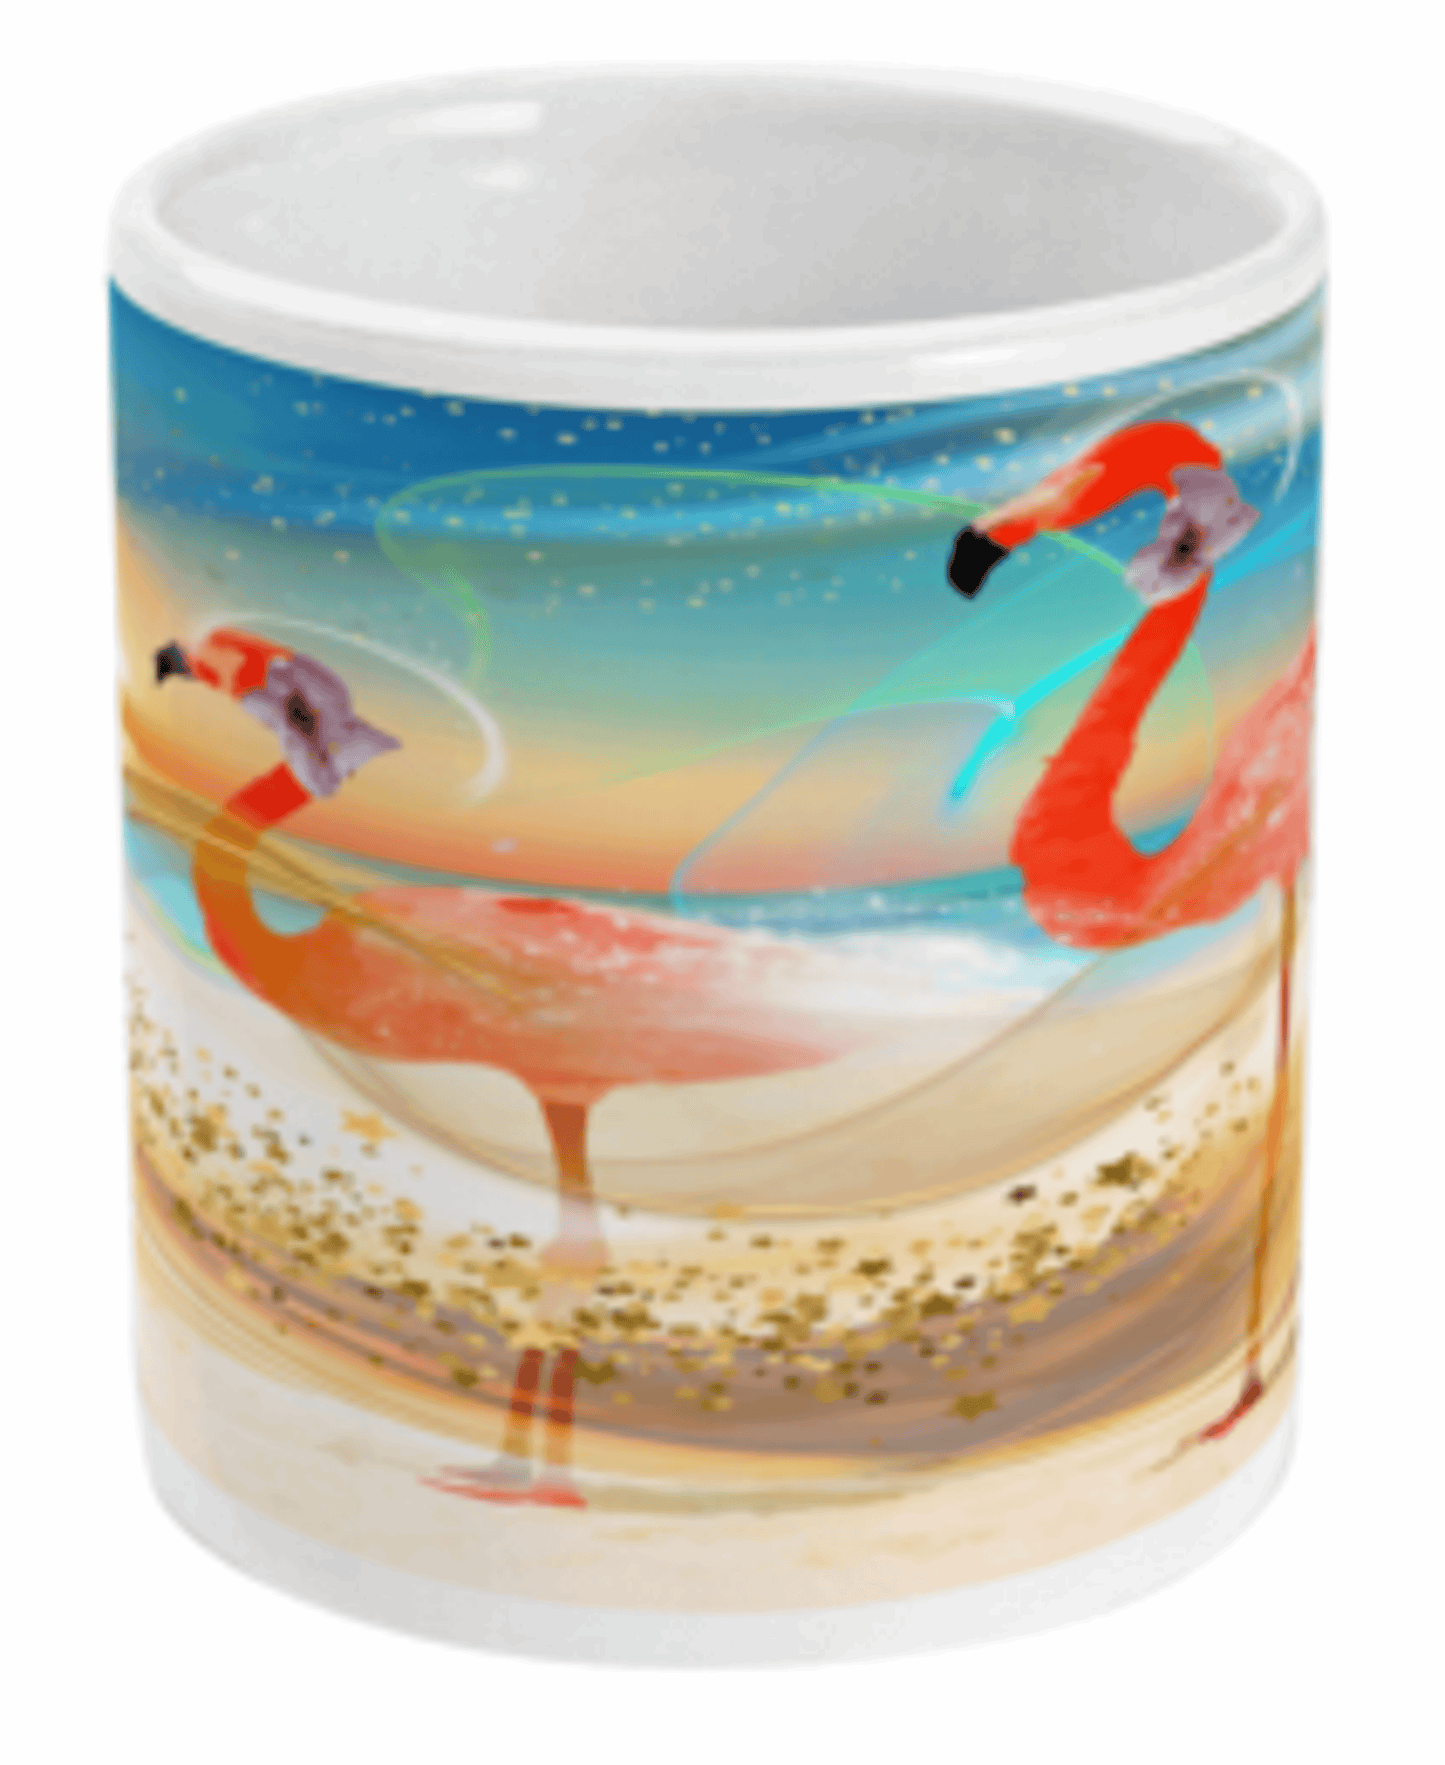  Flamingo Sunset All Around Print Mug by Free Spirit Accessories sold by Free Spirit Accessories